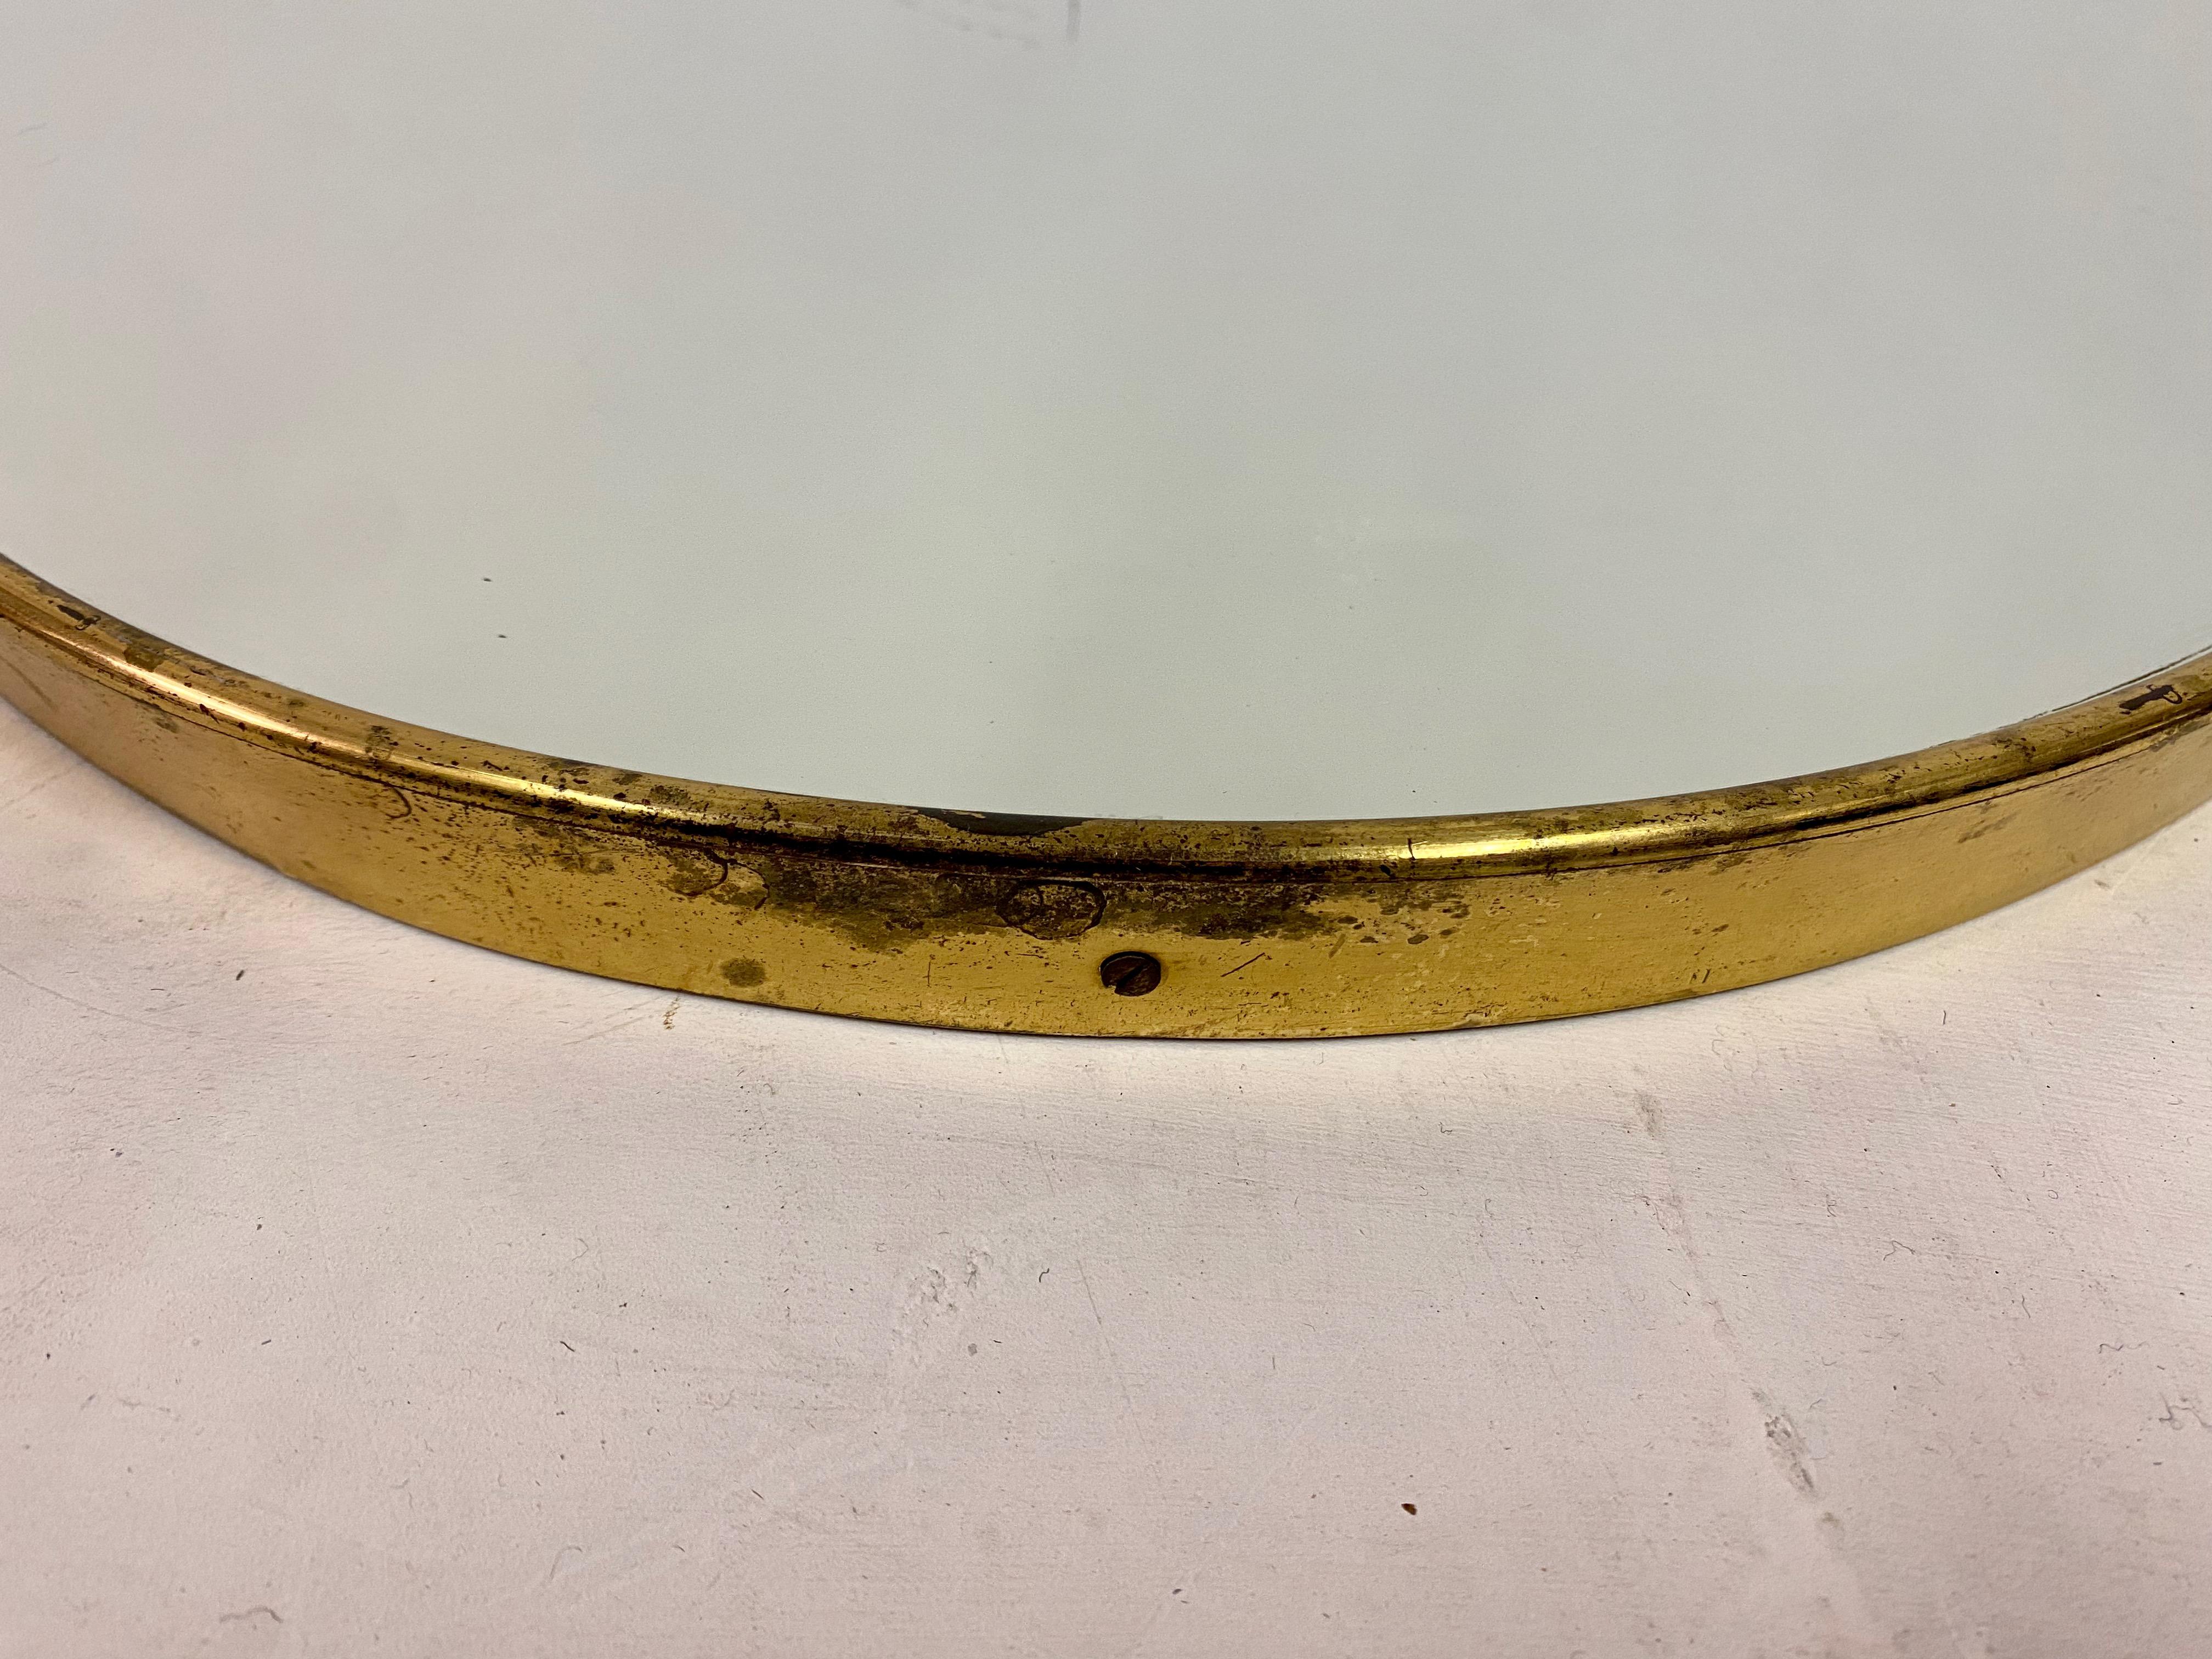 brass shield mirror